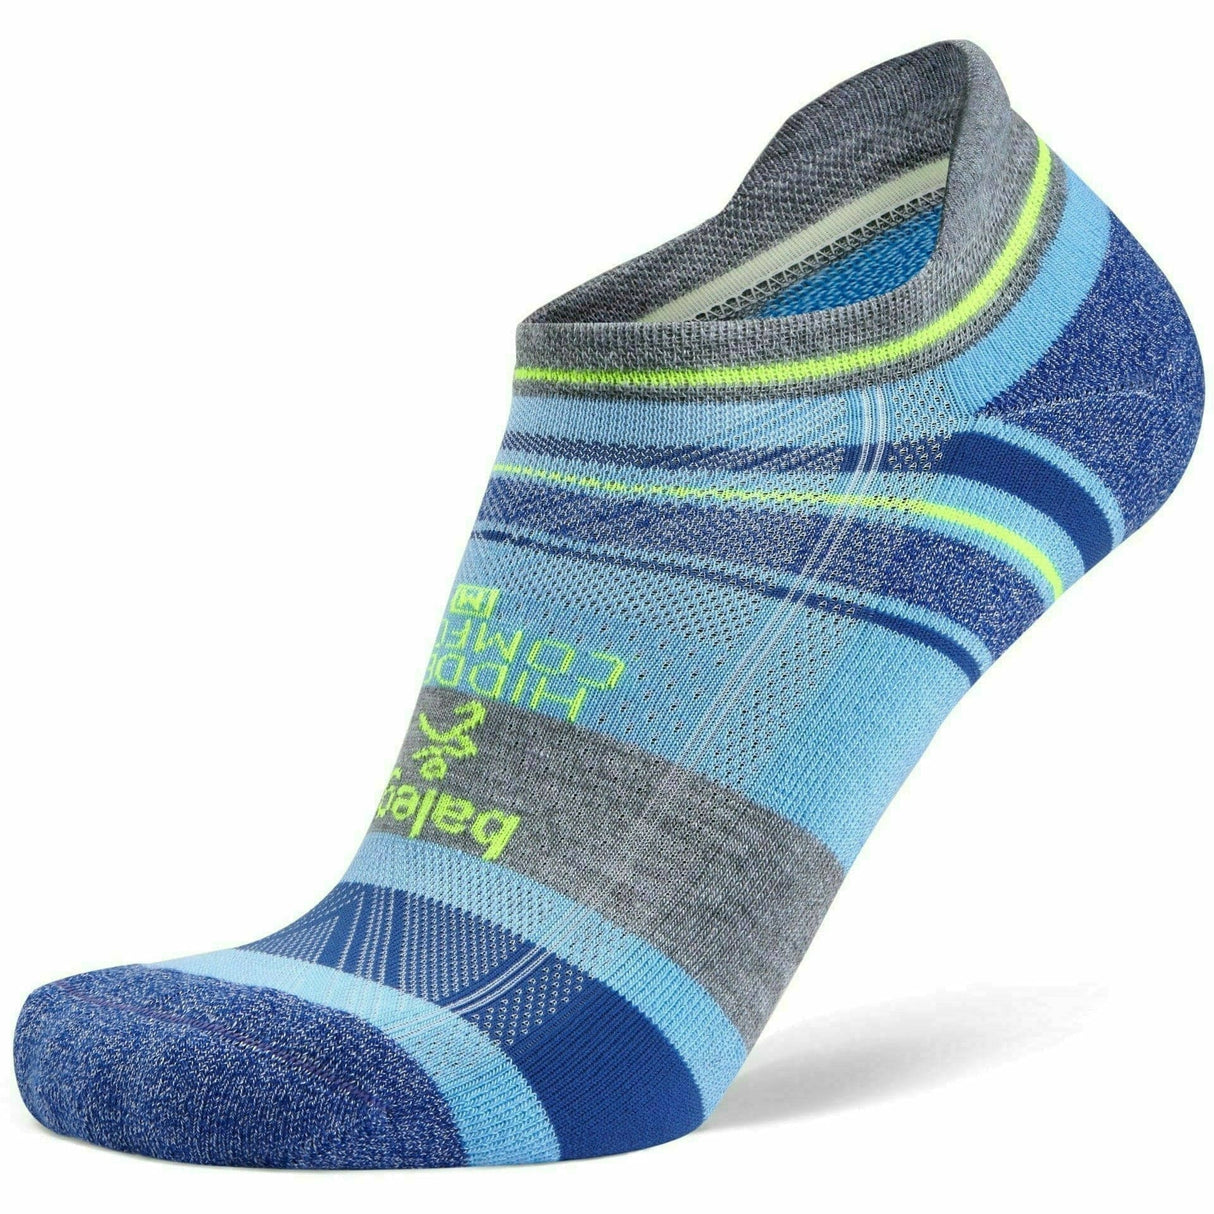 Balega Hidden Comfort No Show Tab Socks - Clearance  -  Large / Cool Blue